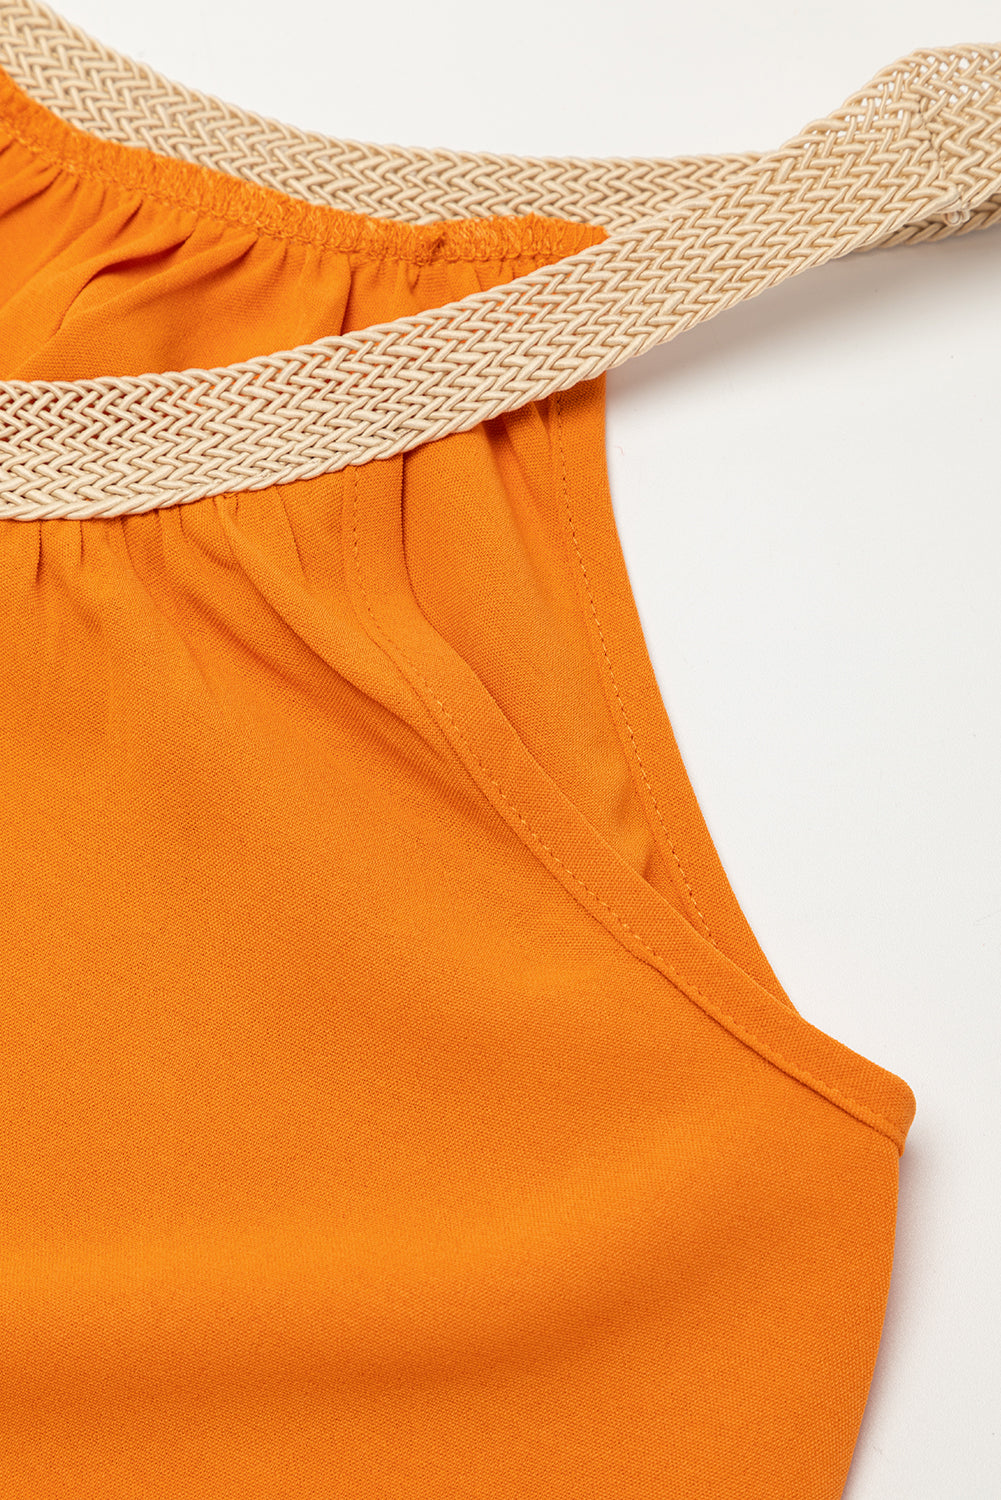 Robe babydoll orange sans manches à encolure tissée style bohème Vitality